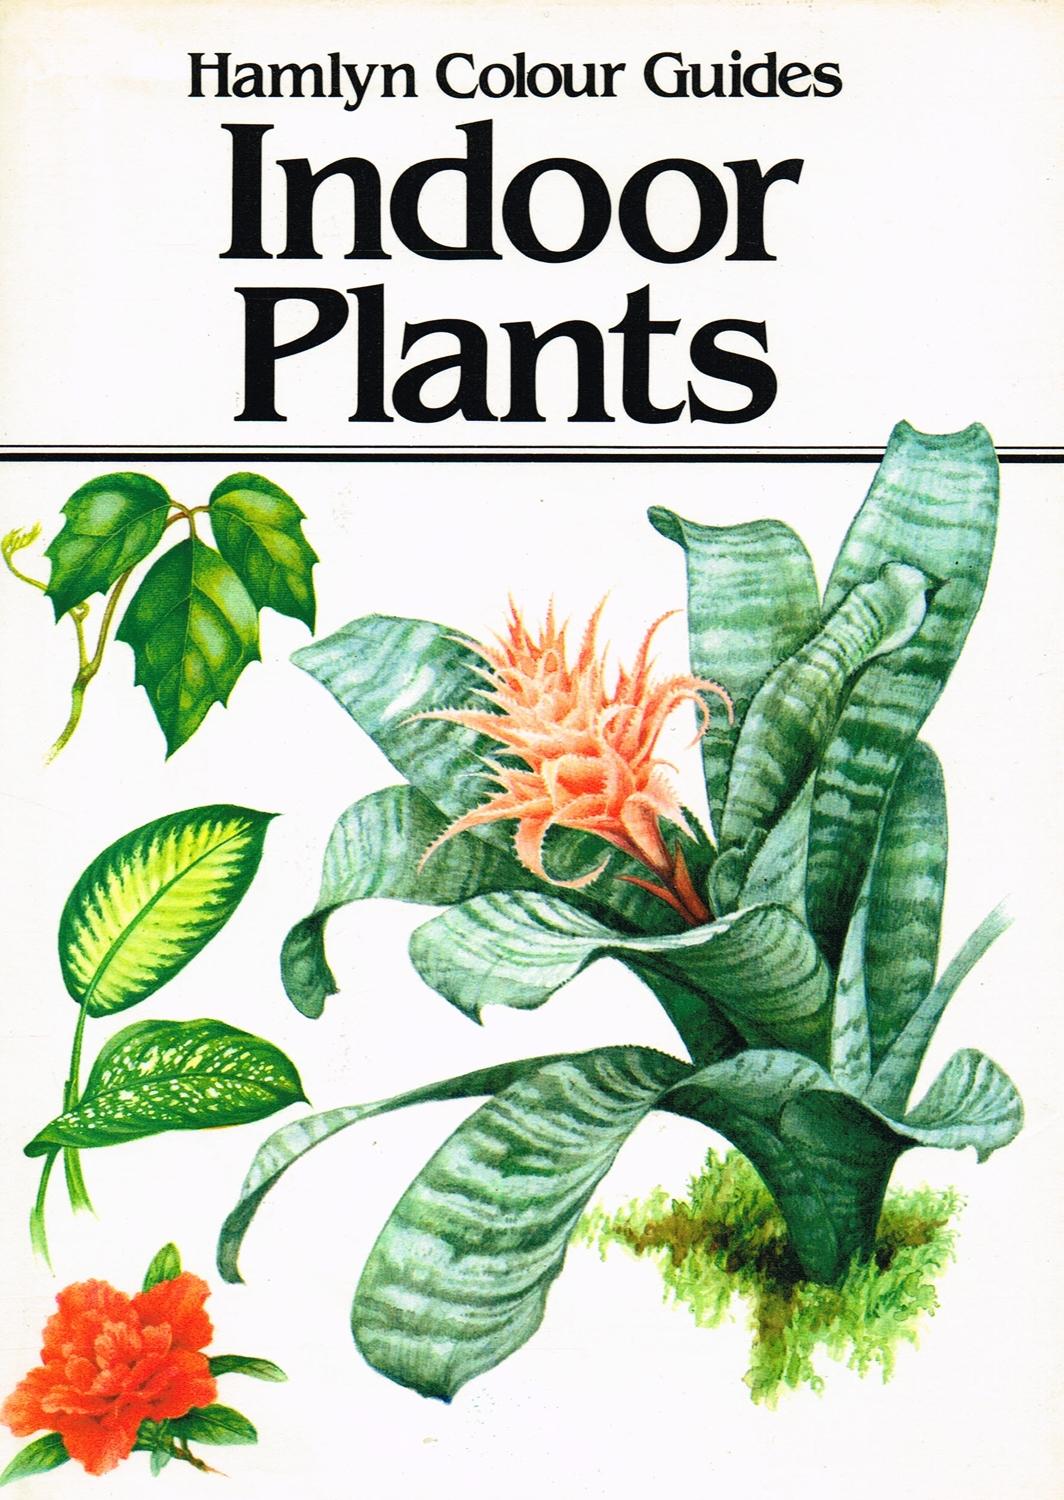 Hamlyn Colour Guide to Indoor Plants